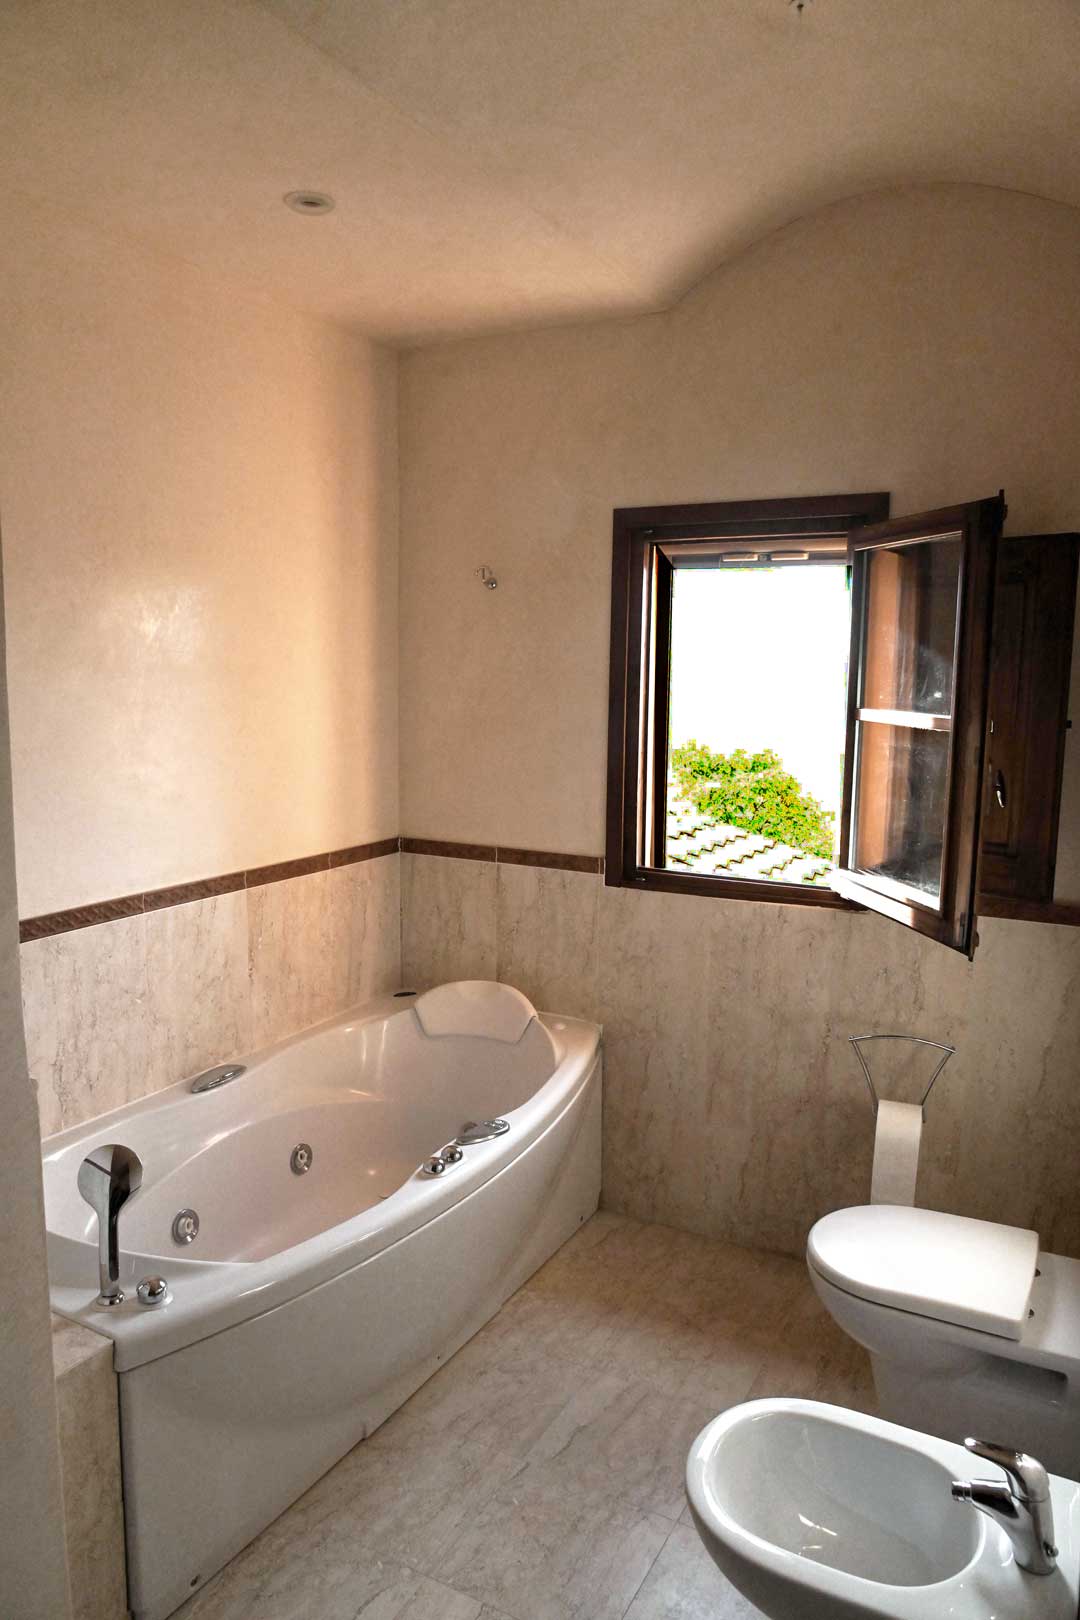 Italy Villa Bellavista Certaldo Chianti; bathroom with tub, bidet and wc; open window overlooking trees and garden - villa rentals by Timeless Tuscany tour operator